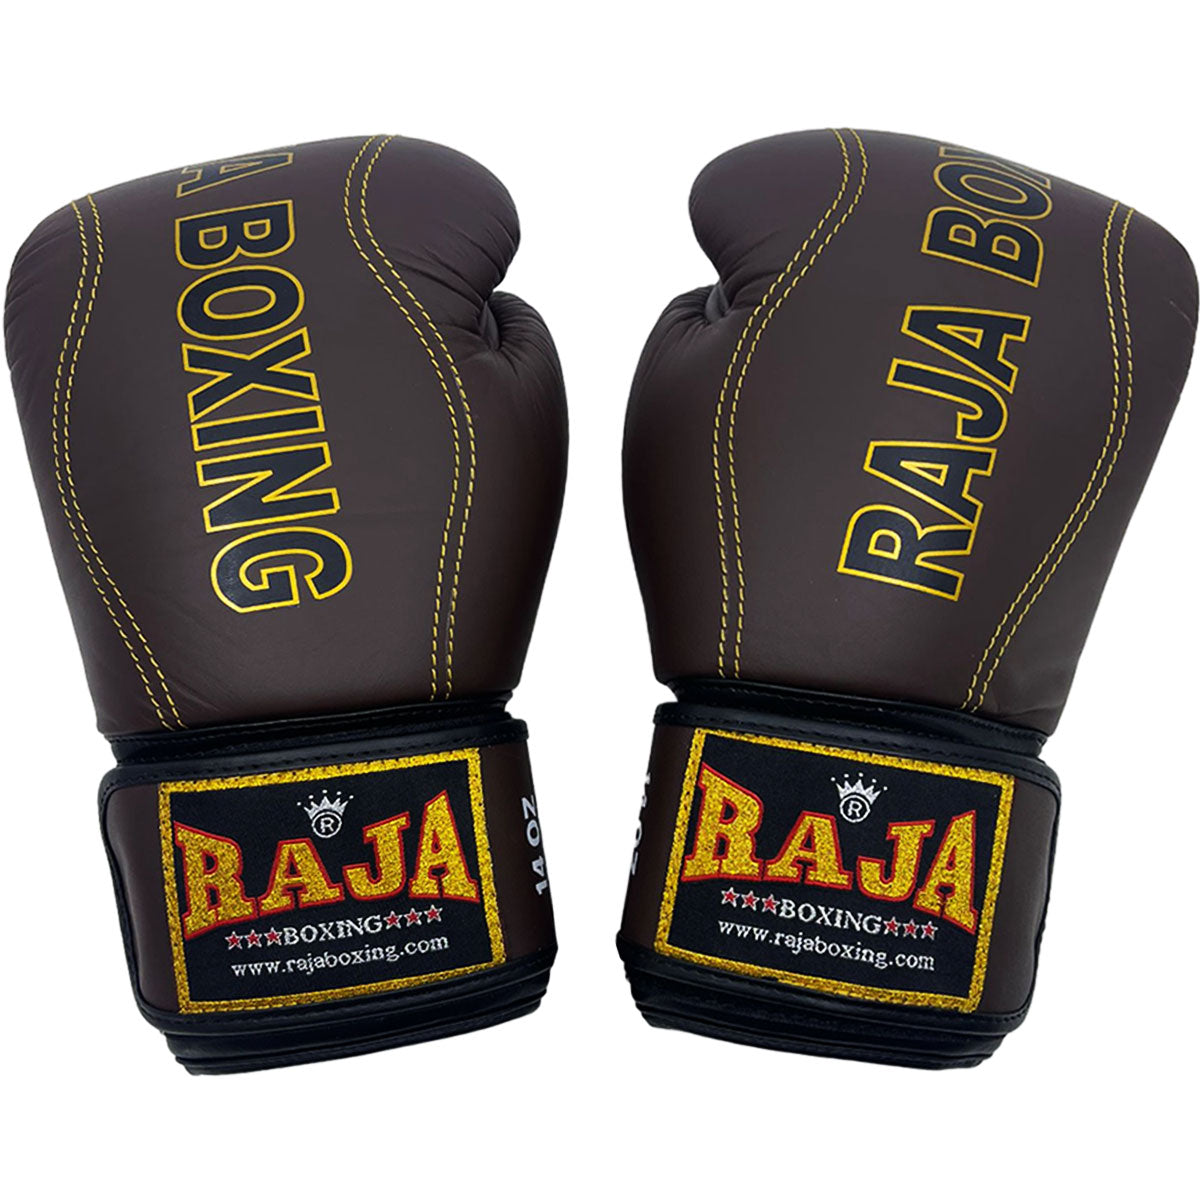 Boxing Gloves Raja RJB-P1 Dark Chocolate Premium "Porsche design" Muay Thai